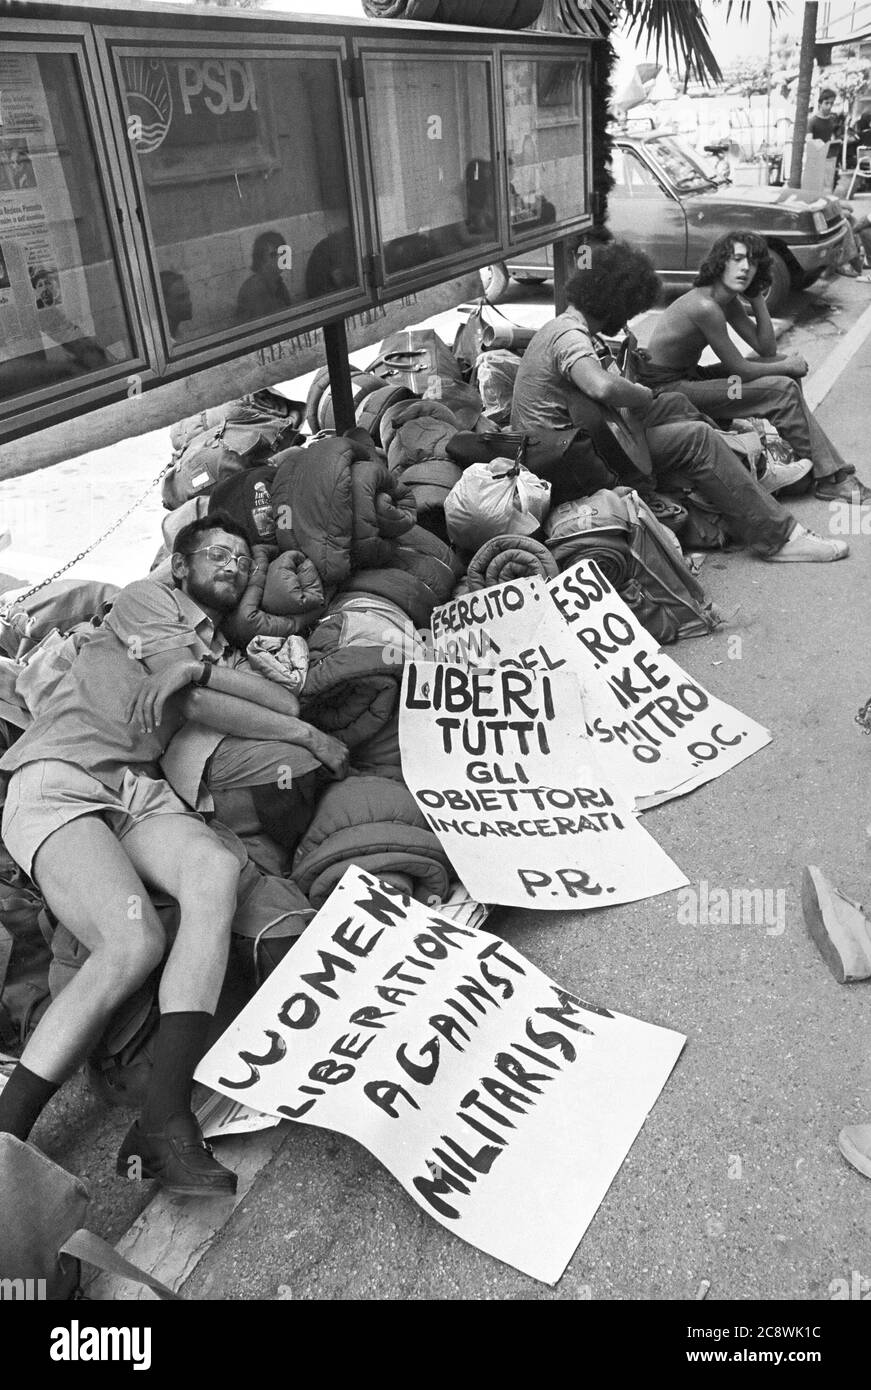 - friedensmarsch vor dem Militärgefängnis Peschiera (juni 1975) - marcia della Pace davanti al carcere militare di Peschiera (giugno 1975) Stockfoto